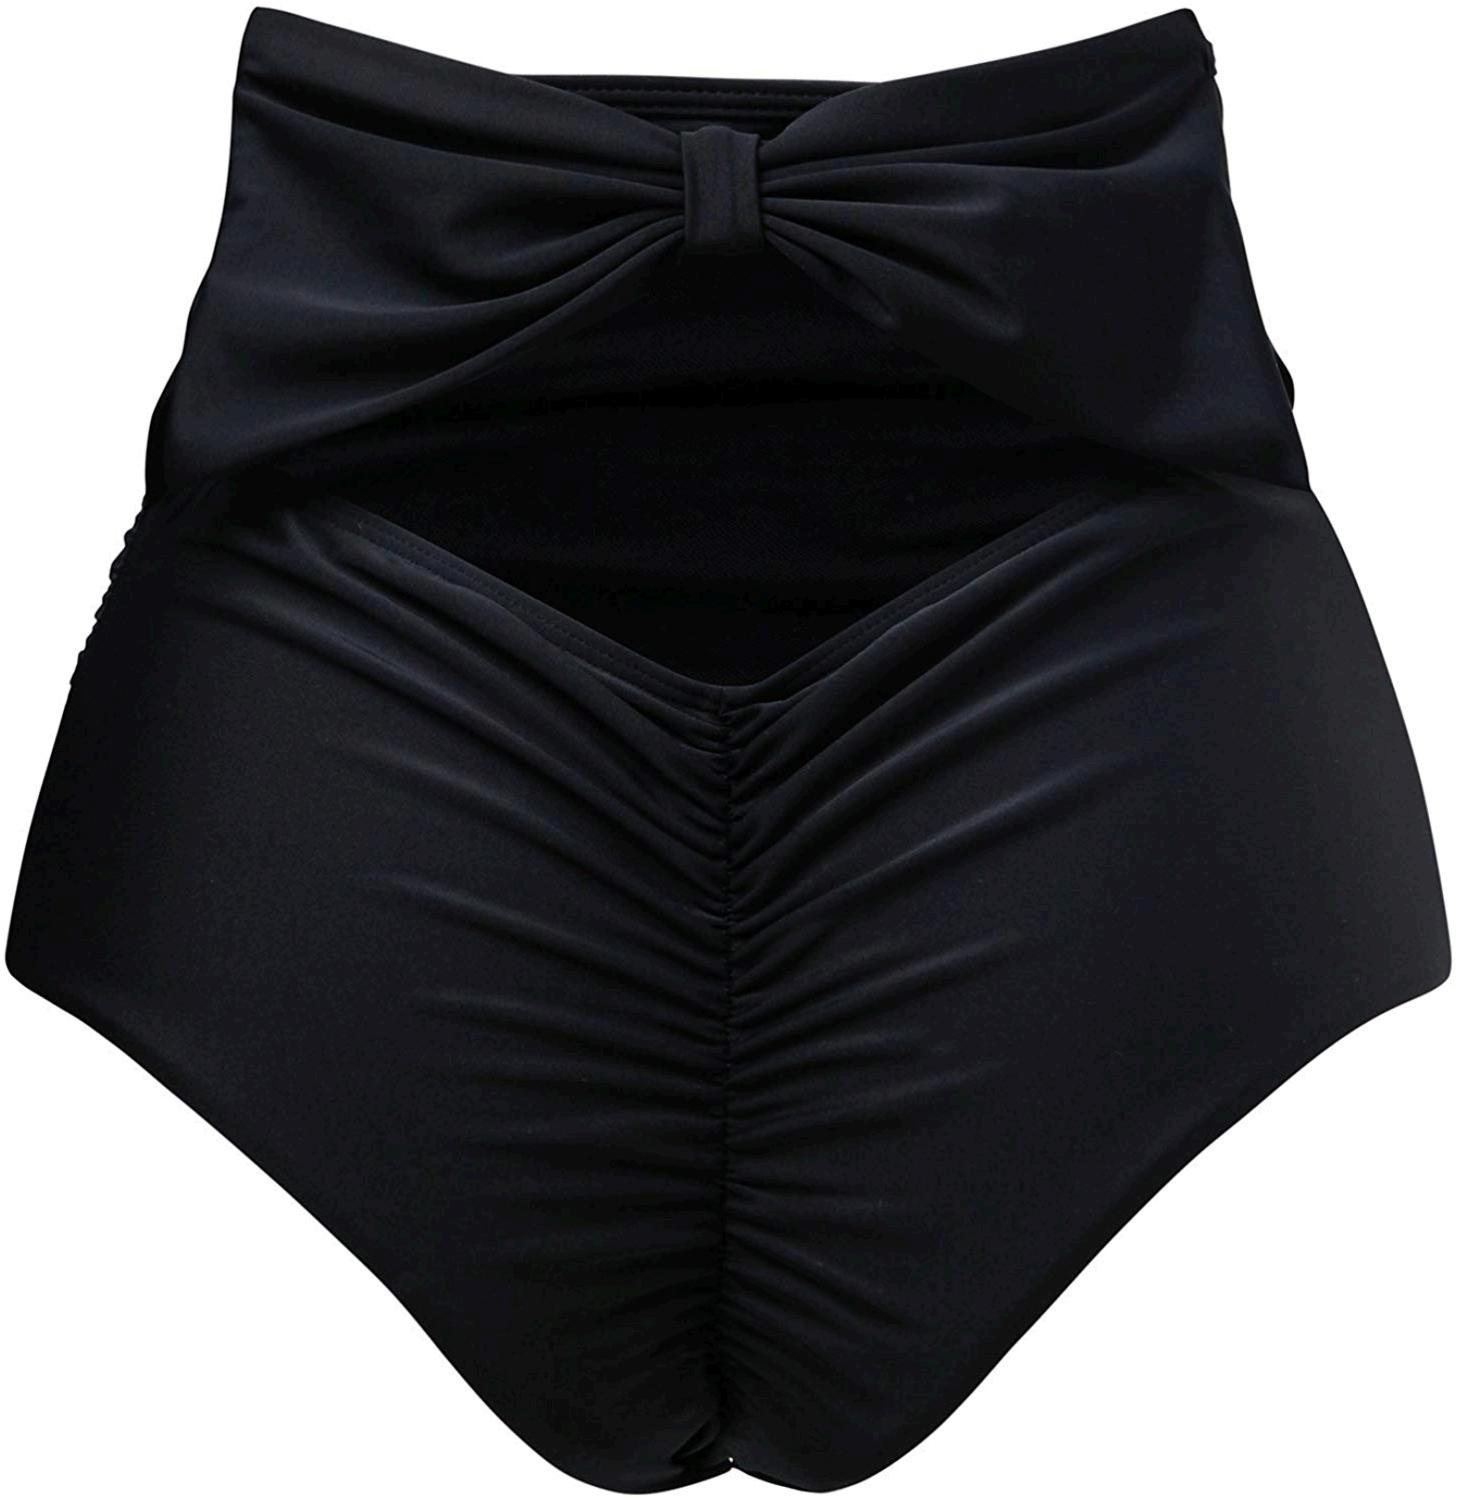 Zohamung Women S High Waisted Bikini Bottoms Brazilian Cheeky Black Size Ebay